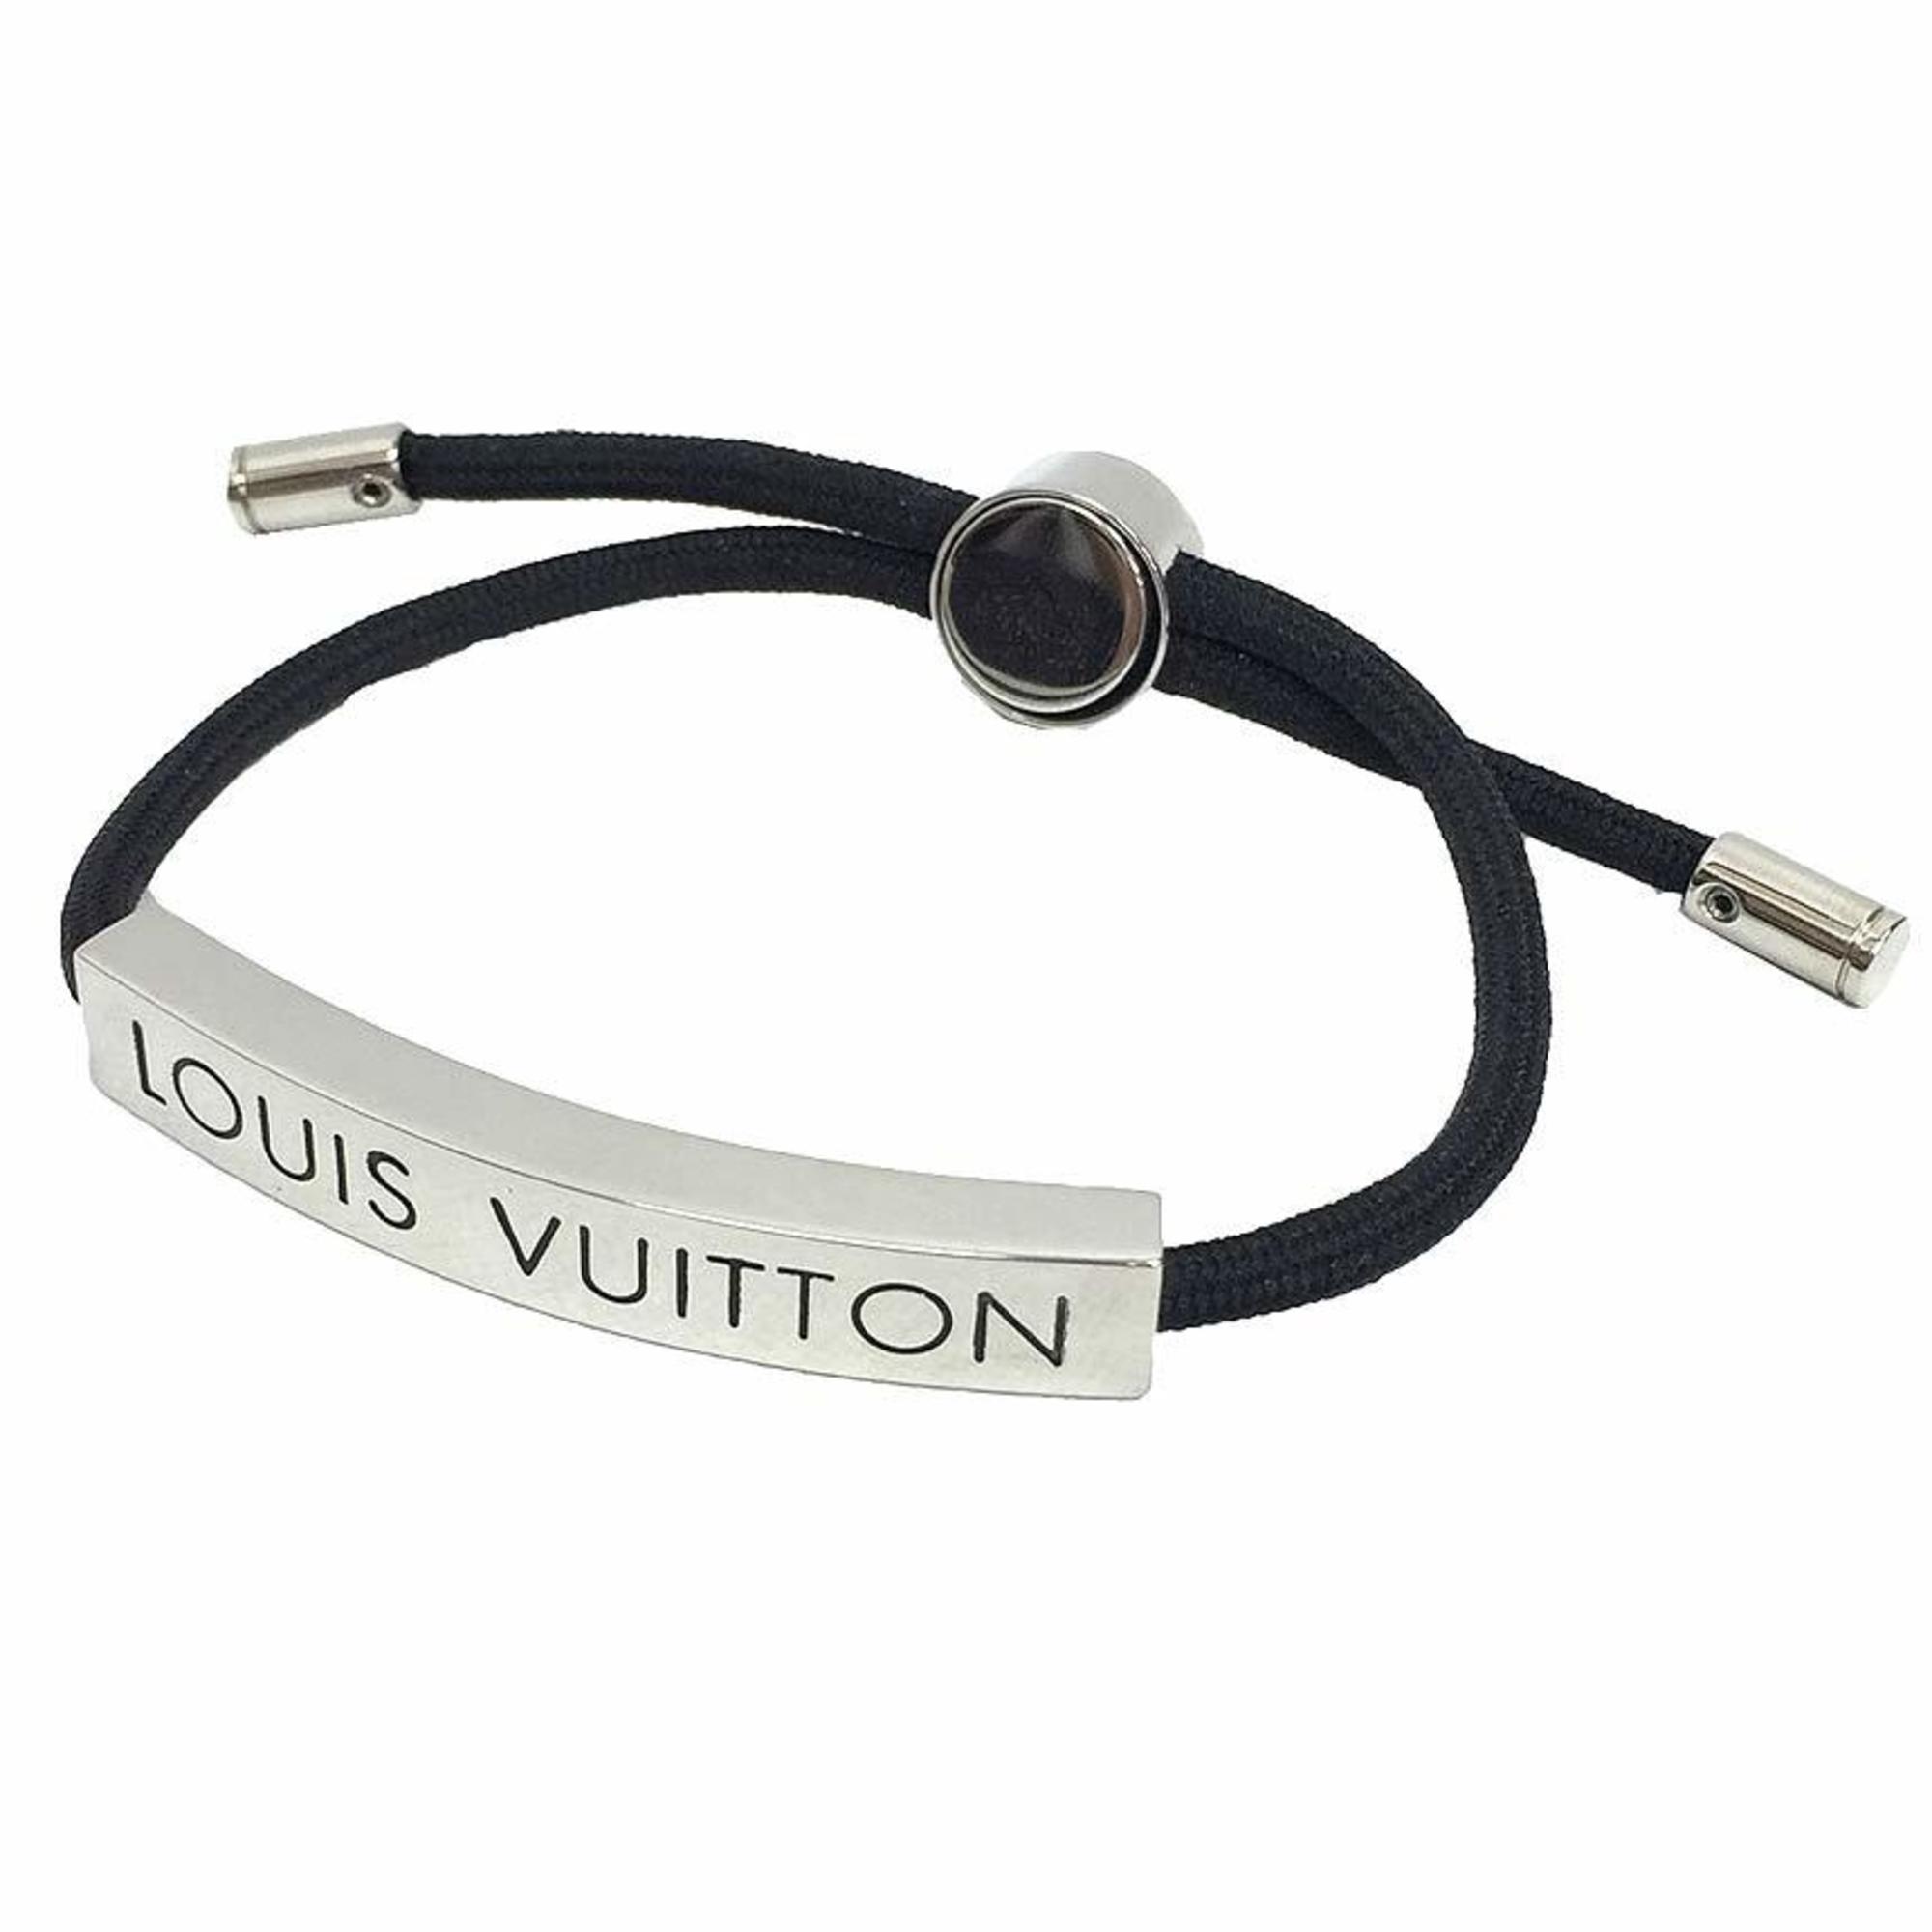 Louis Vuitton LV Space Bracelet Red Metal